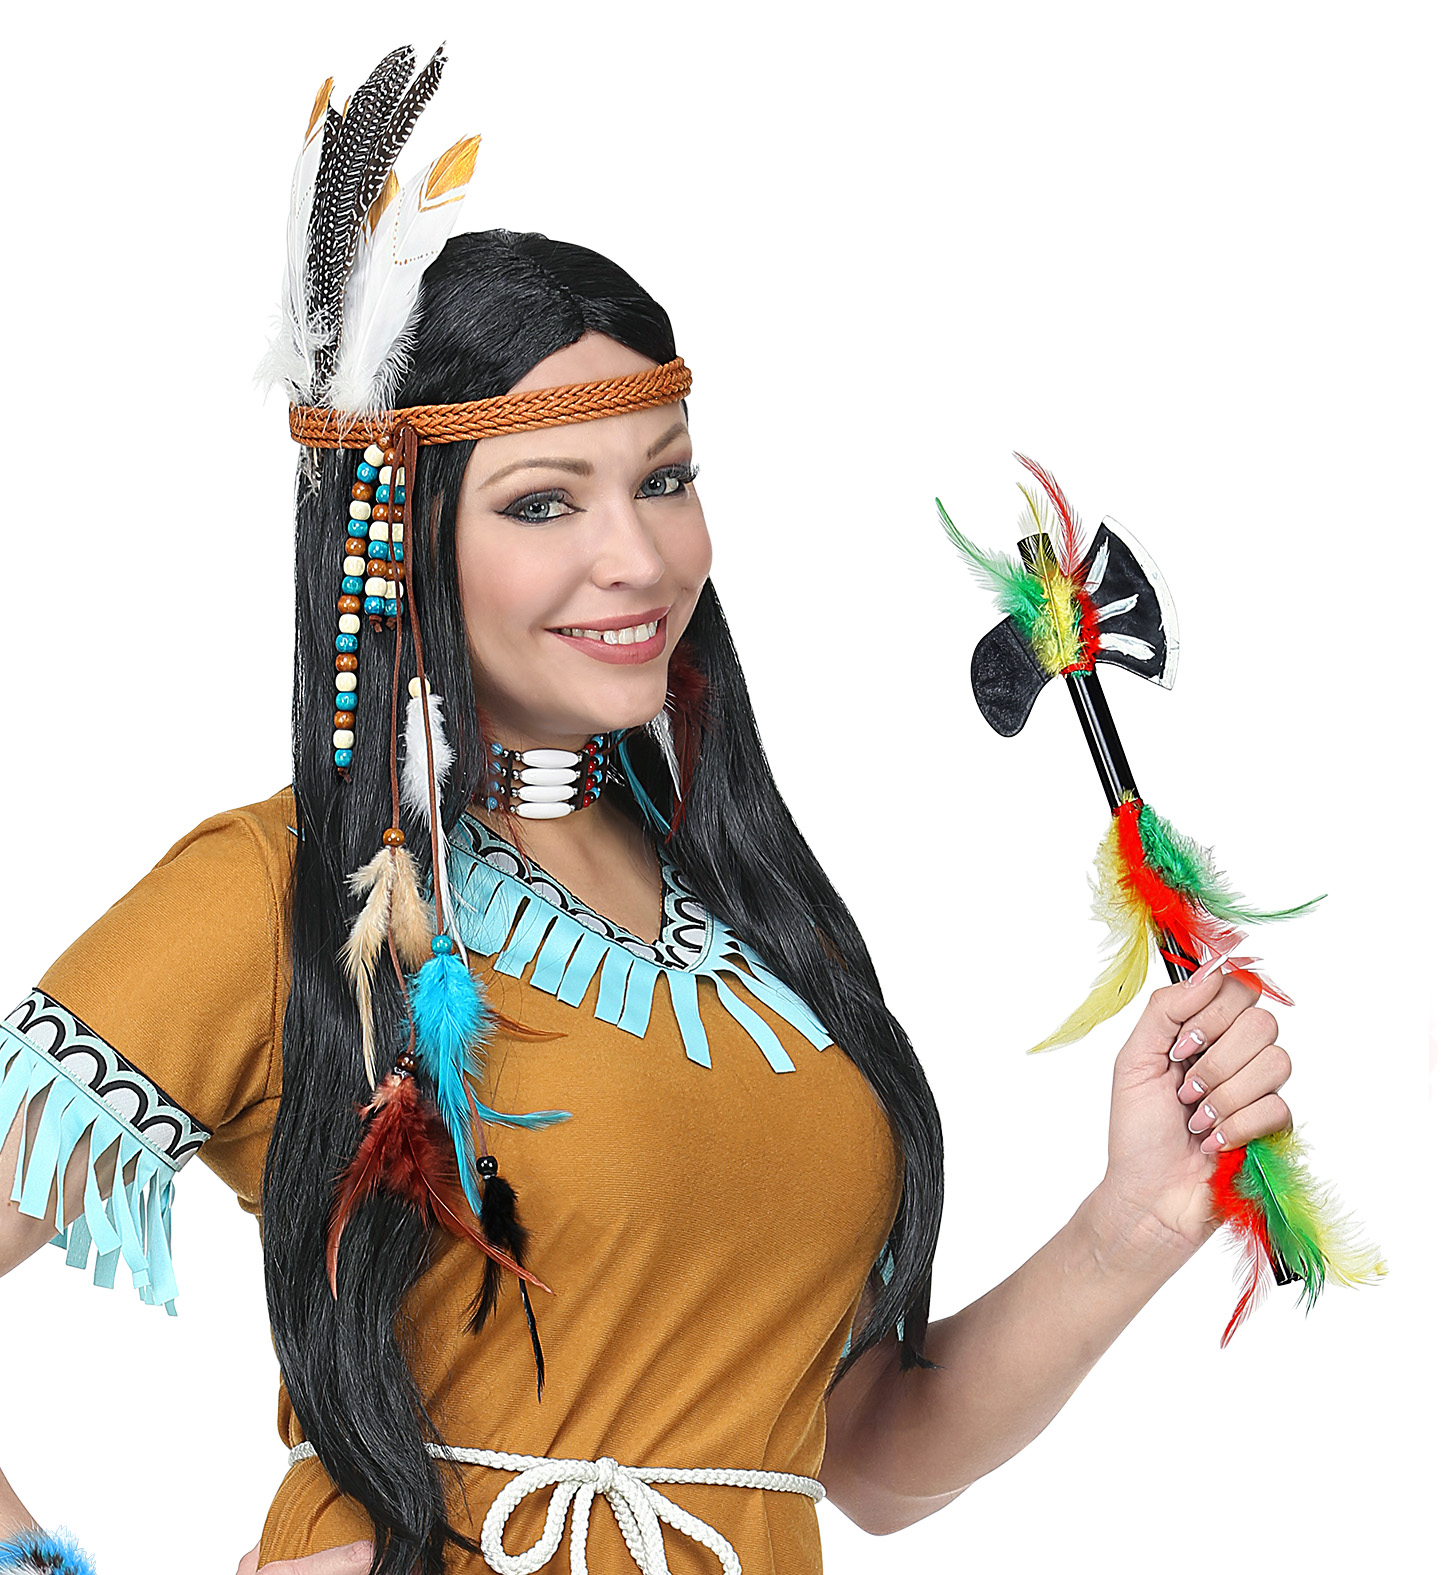 Indiánská zbraň - Tomahawk